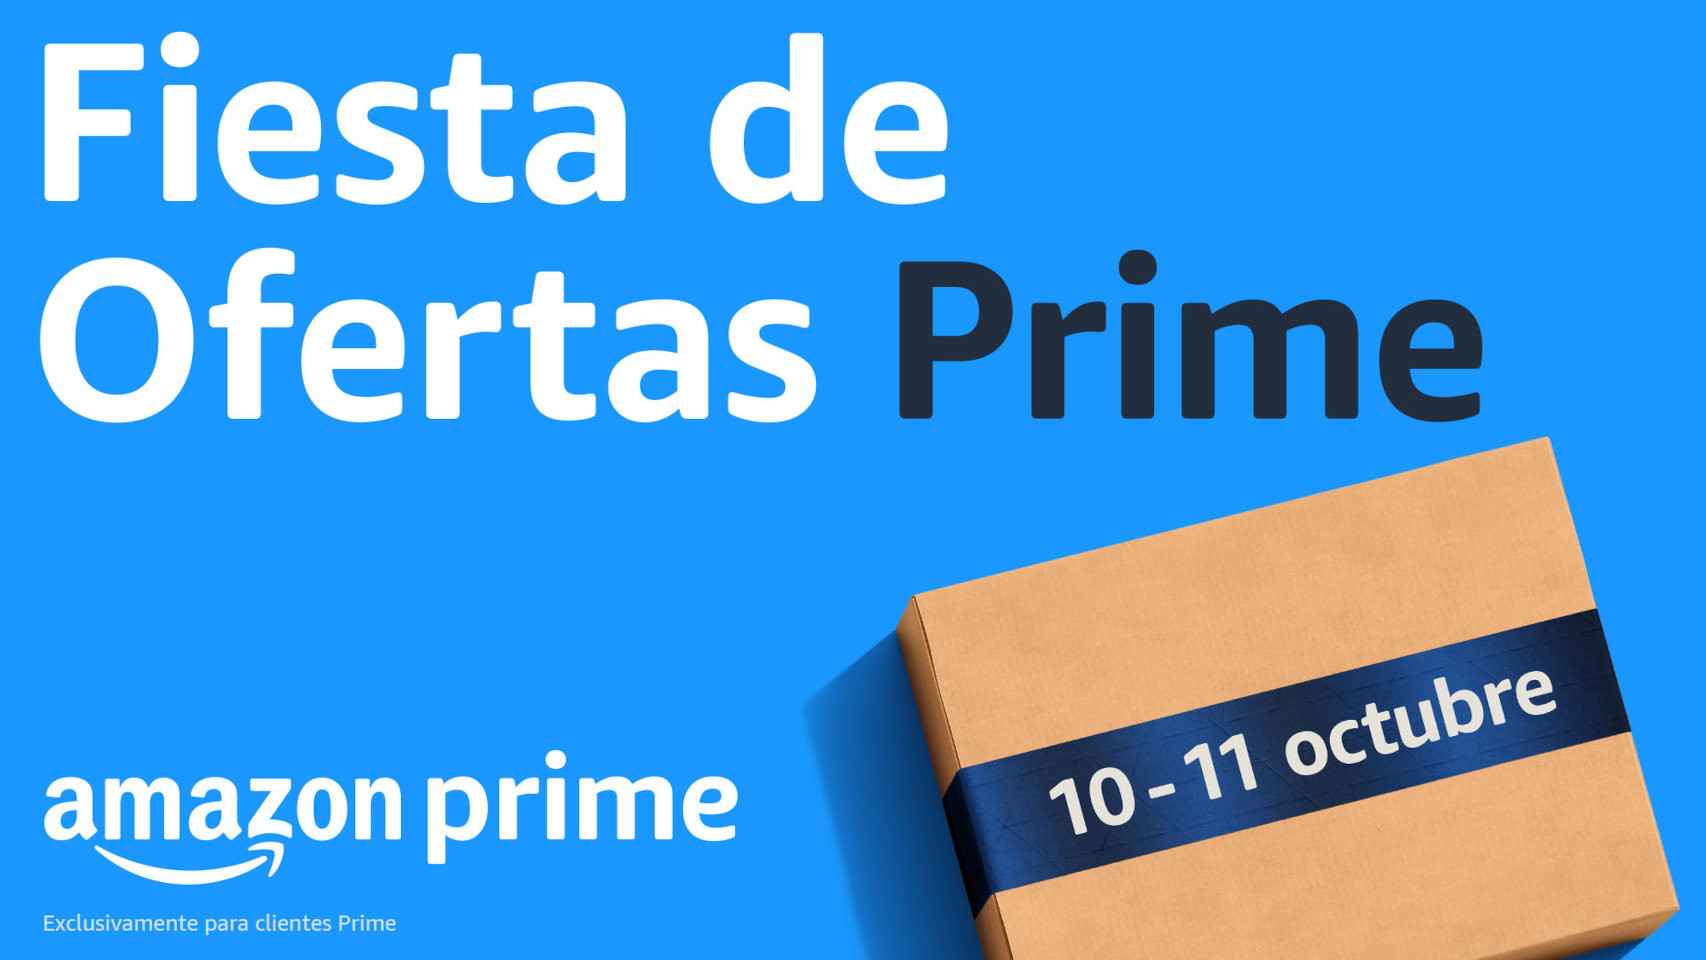 La Fiesta de Ofertas Prime es la alternativa de Amazon al Black Friday